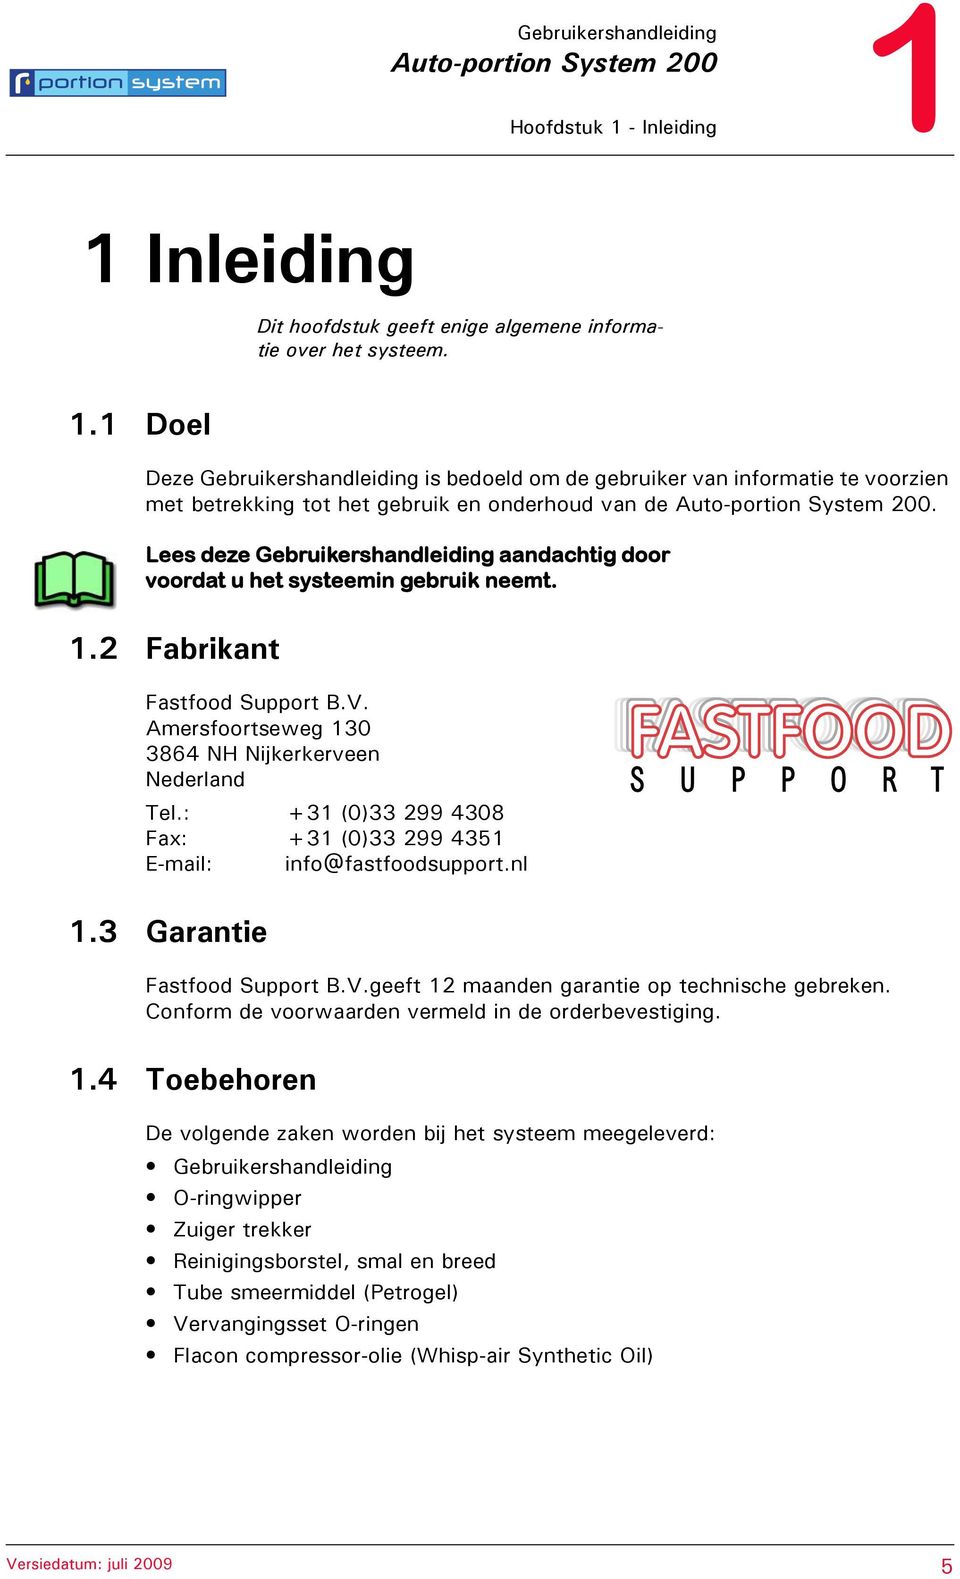 2 Fabrikant Fastfood Support B.V. Amersfoortseweg 130 3864 NH Nijkerkerveen Nederland Tel.: +31 (0)33 299 4308 Fax: +31 (0)33 299 4351 E-mail: info@fastfoodsupport.nl 1.3 Garantie Fastfood Support B.